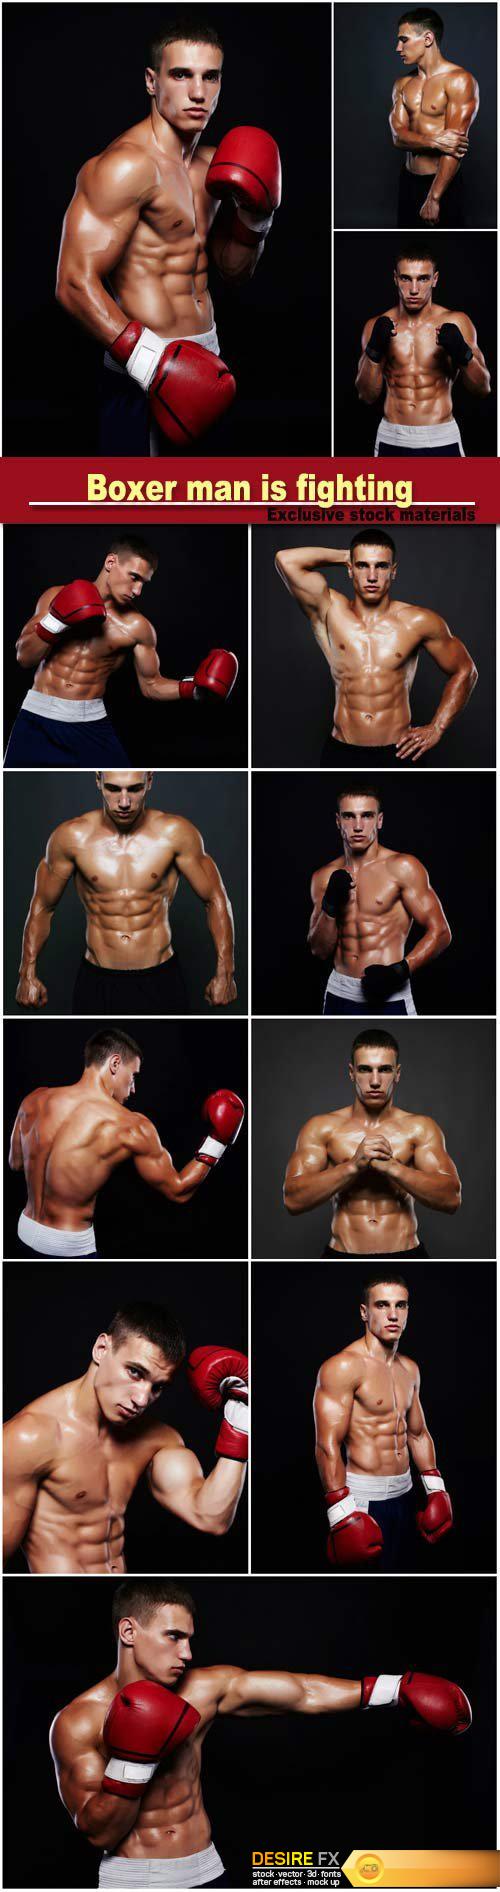 Boxer man is fighting, handsome muscular man, bodybuilding